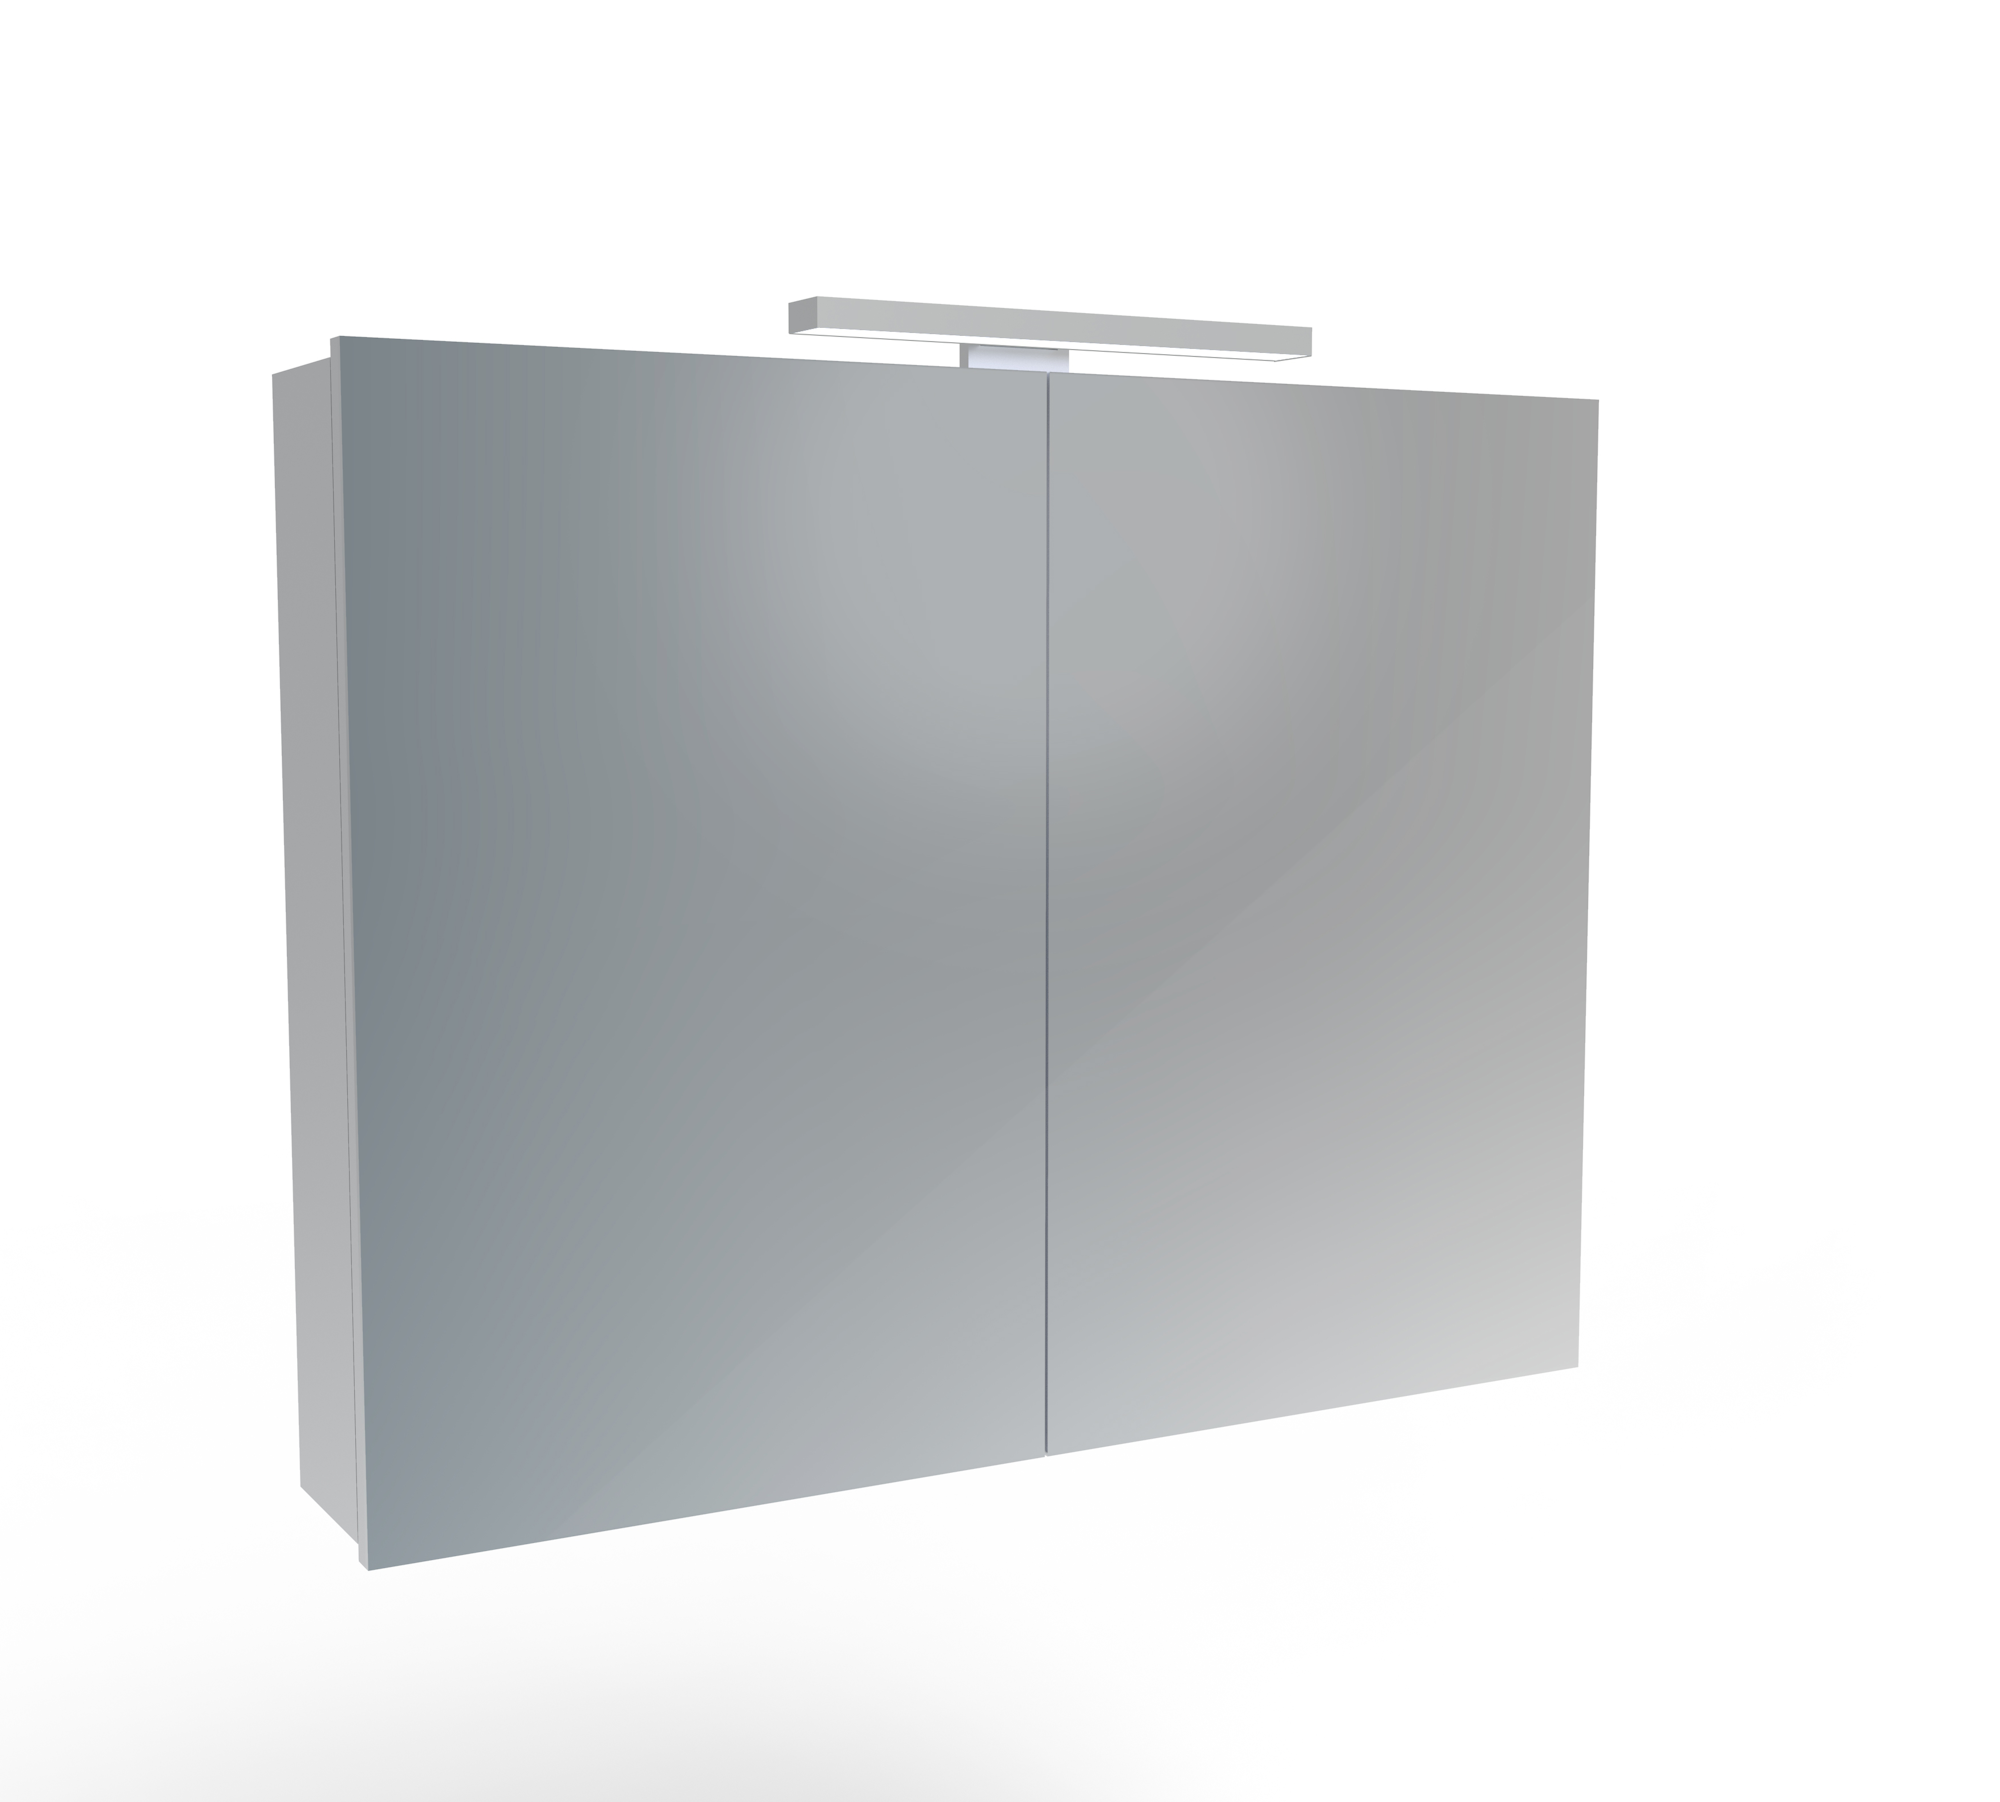 OLYMPUS 90cm 2 door electric mirror cabinet